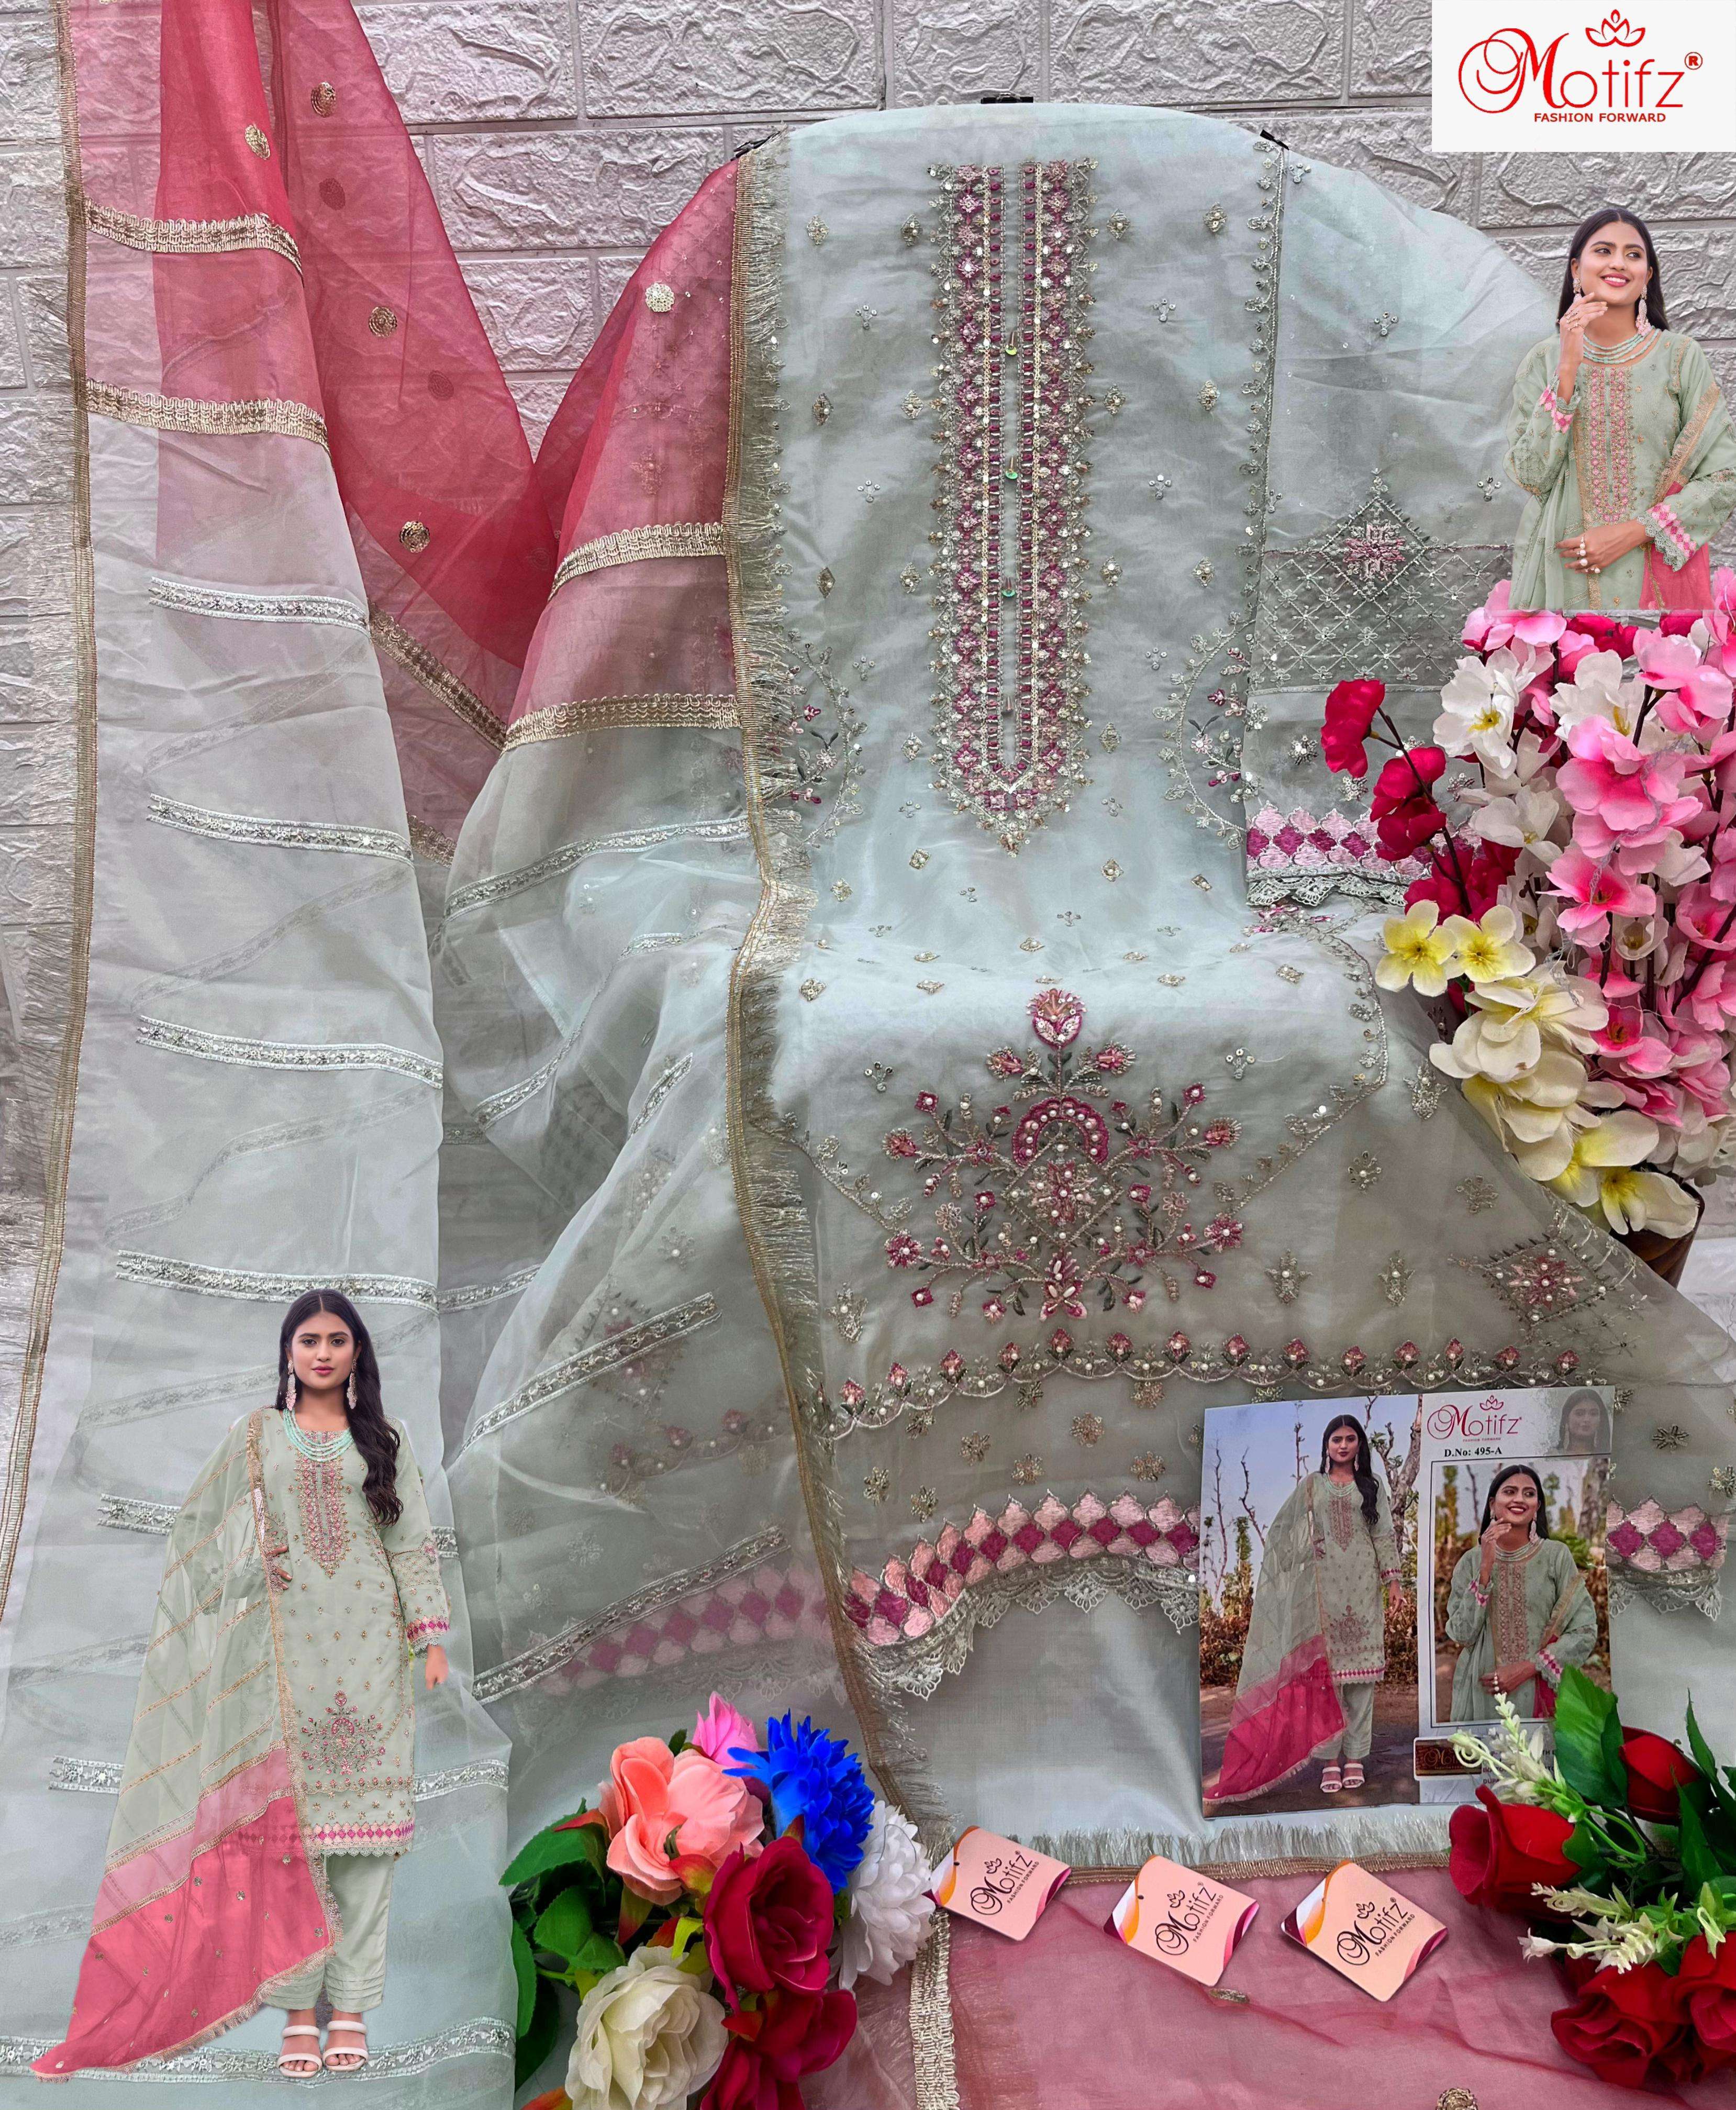 motifz 495 colour series latest wedding wear pakistani salwar kameez wholesaler price surat gujarat